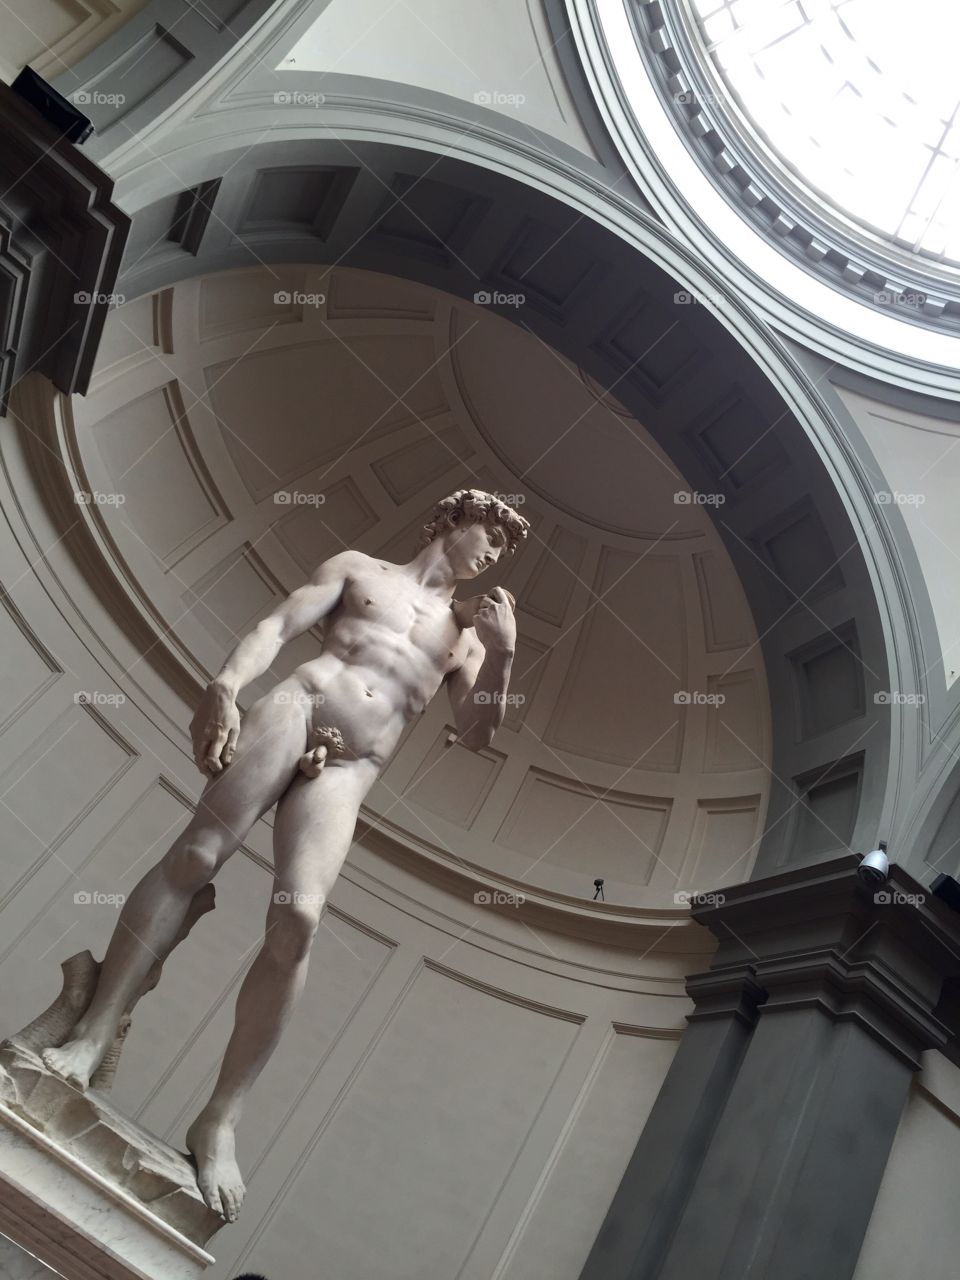 The statue of David 